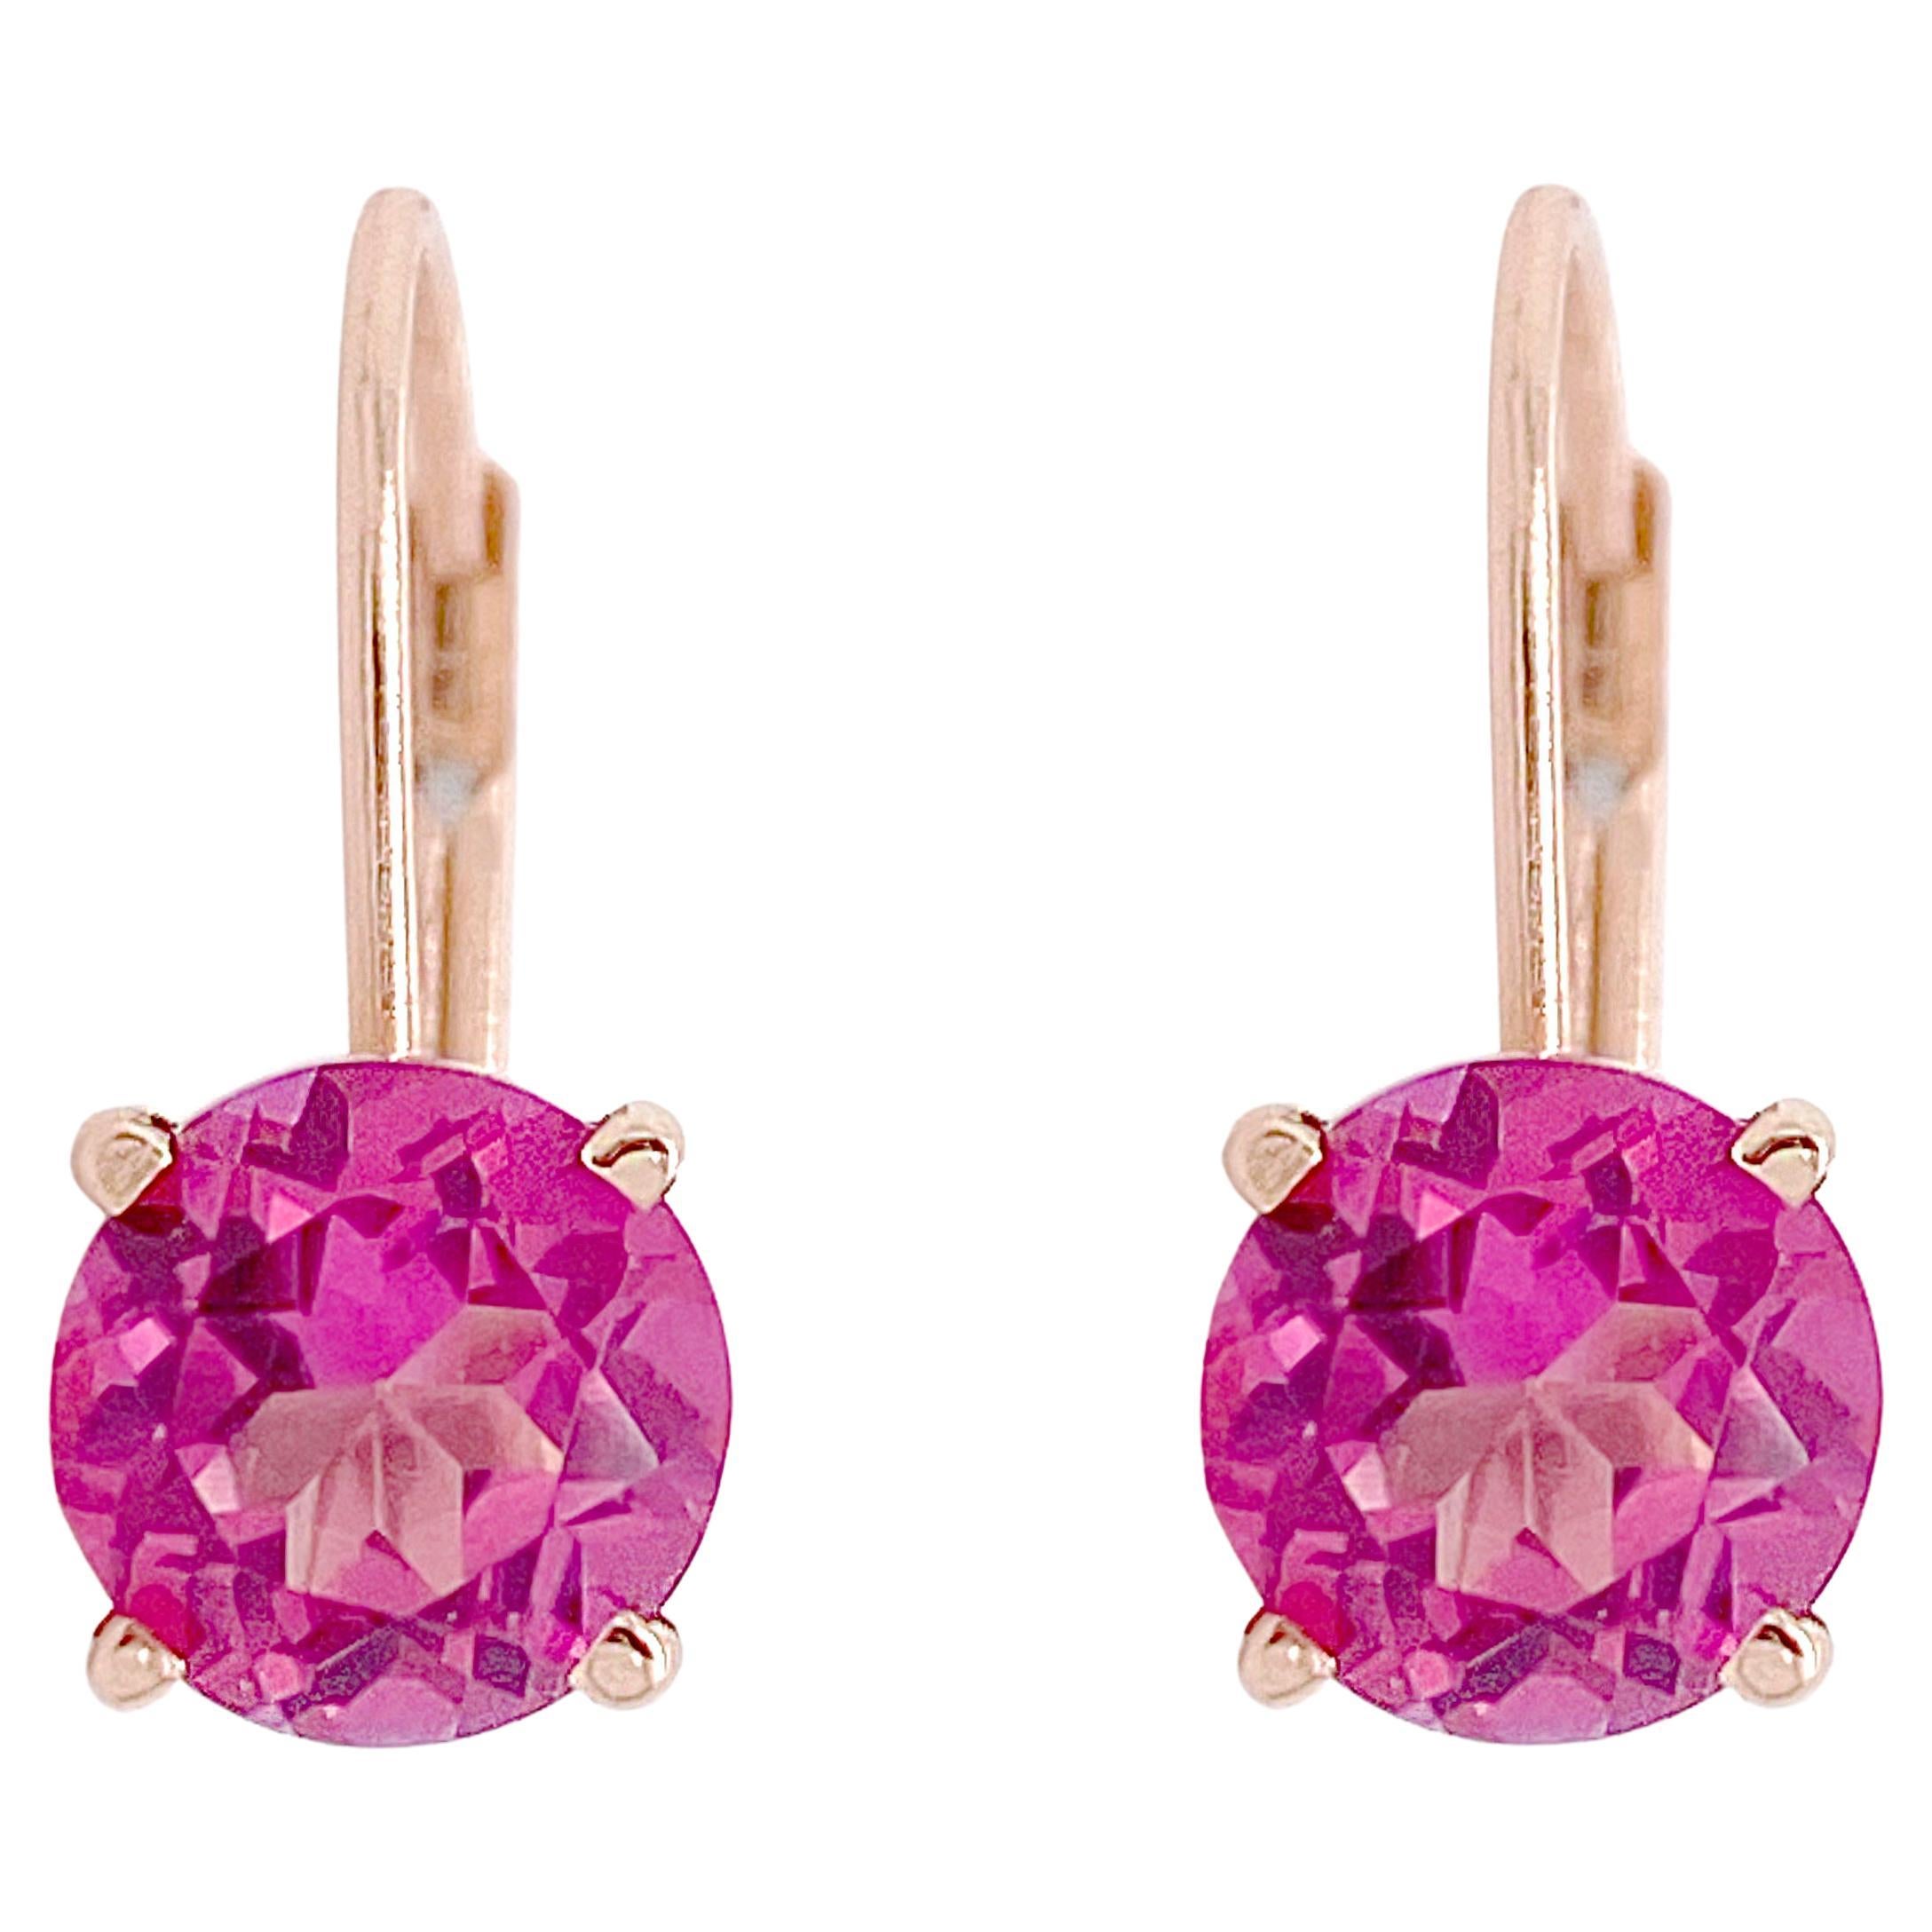 2.00 Carat Pink Topaz Dangle Earrings 14 Karat Rose Gold Lever Back Earrings